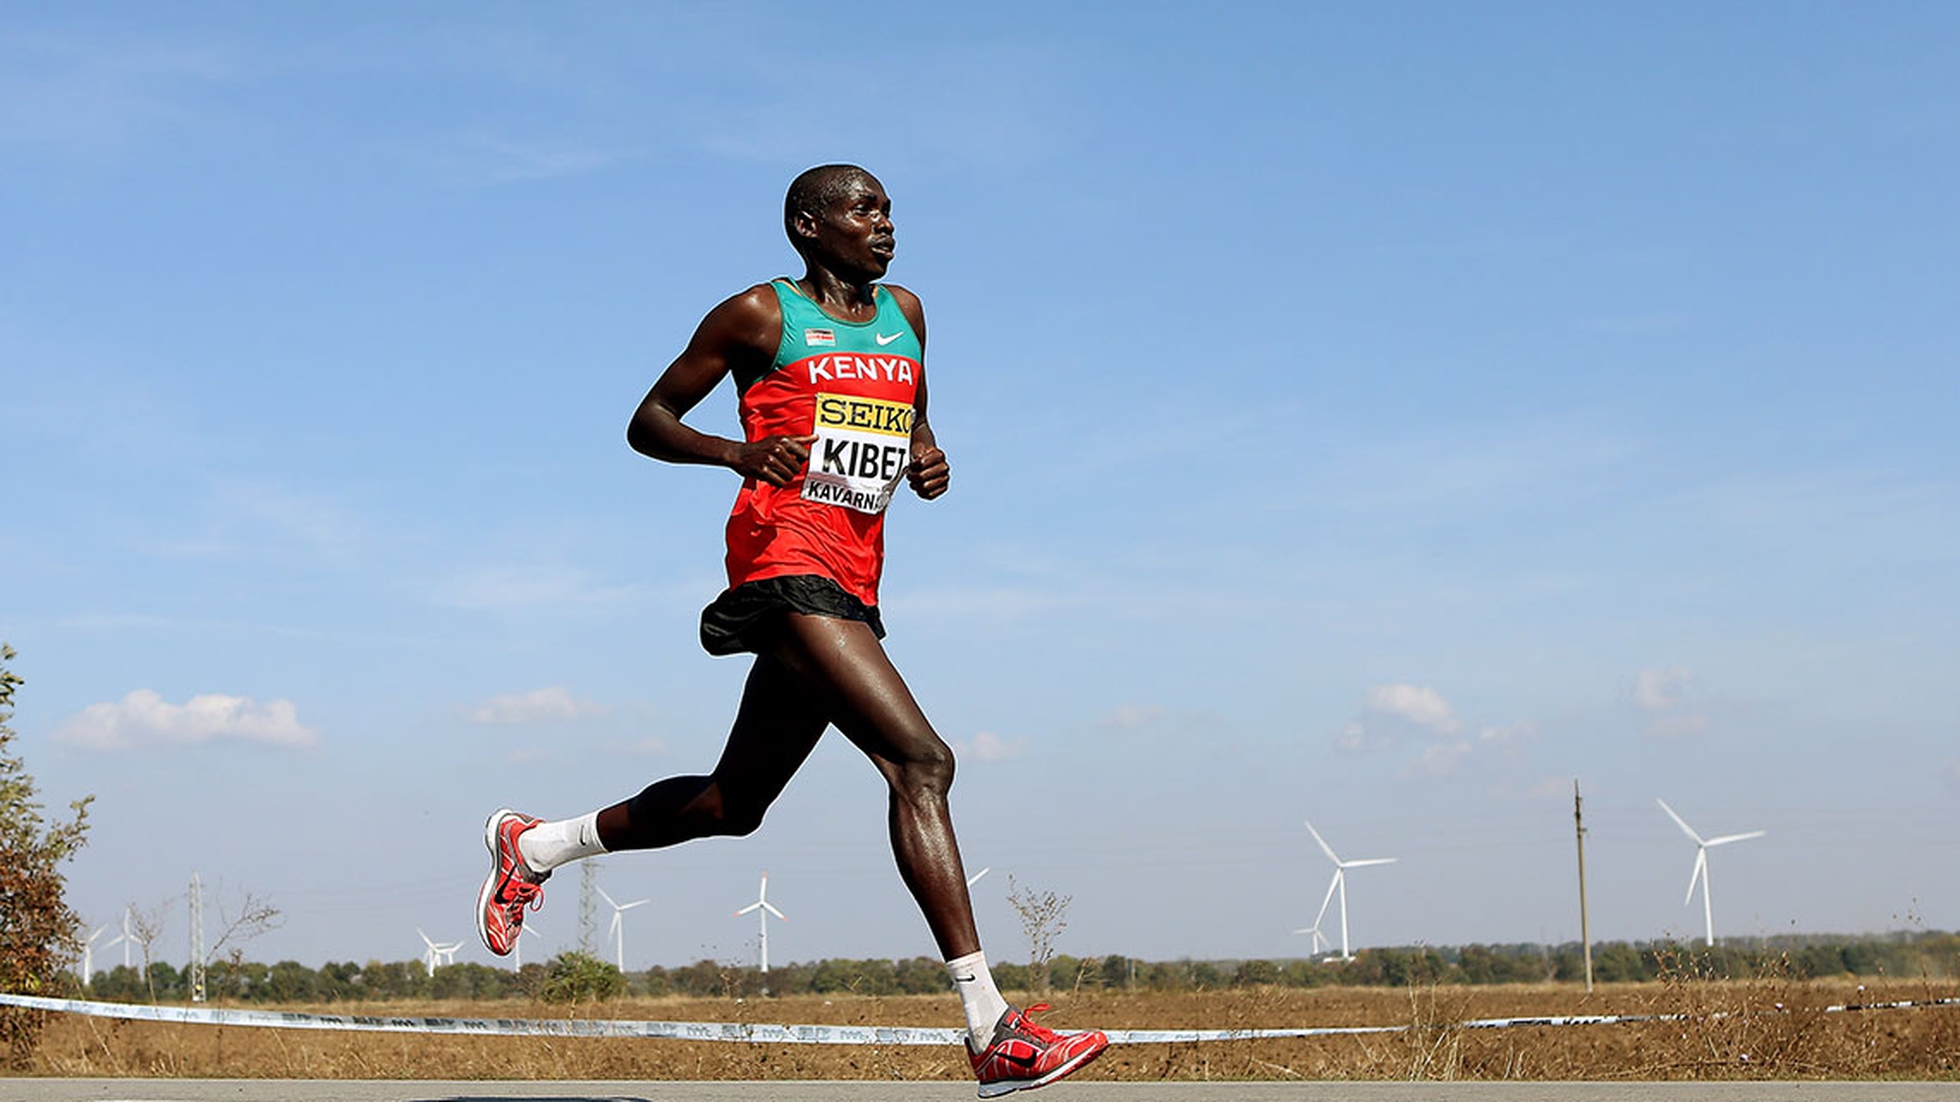 Спортсмен бегающий на длинные дистанции. Кипчоге бегун кенийский. Календжин племя. Кепчуга бегун. Хенри роно кенийский бегун.